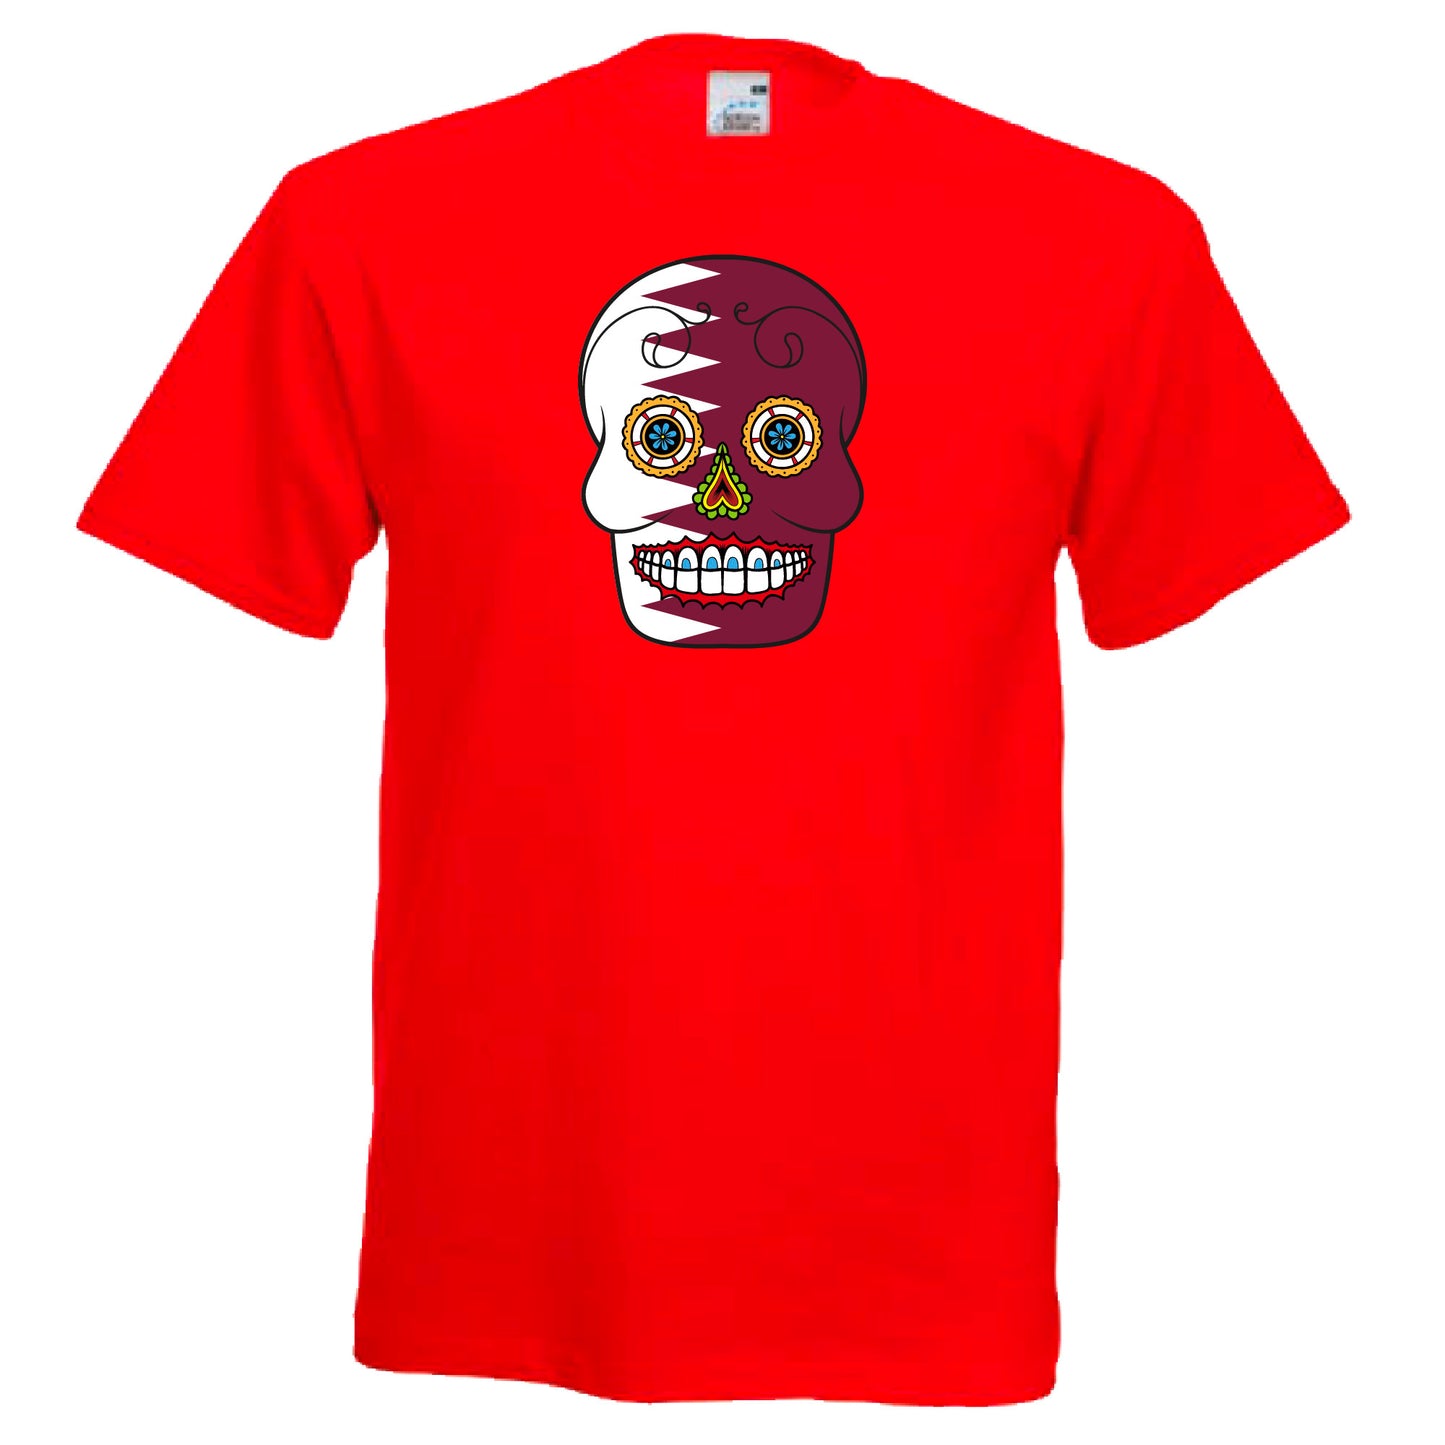 INDIGOS UG - T-Shirt Herren - Katar - Skull - Fussball